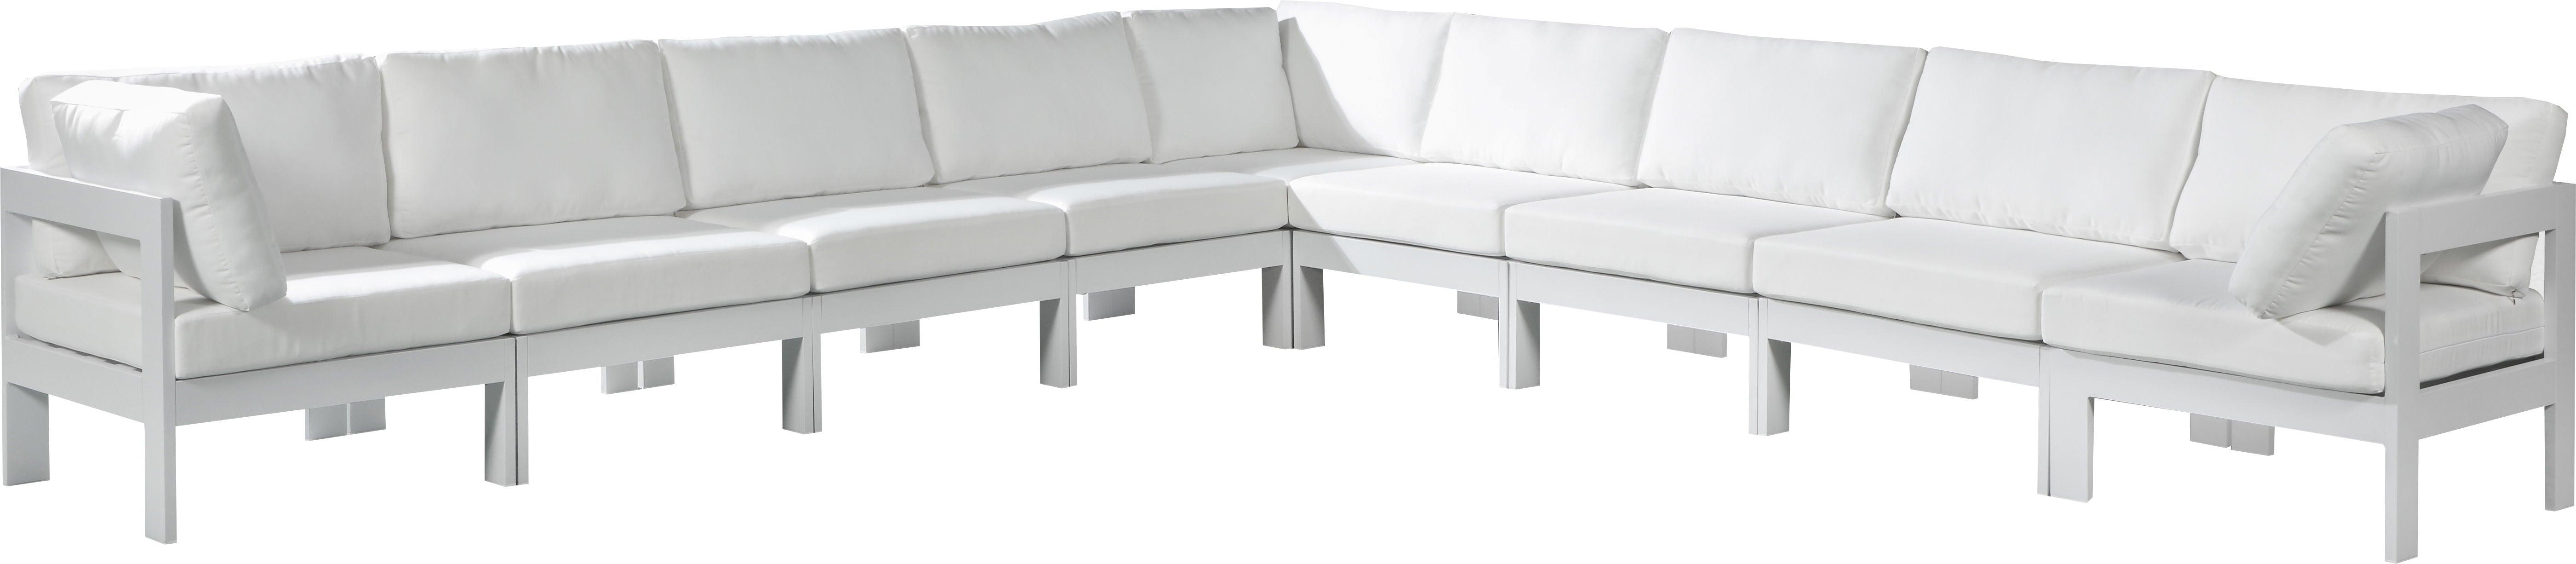 Meridian Furniture - Nizuc - Outdoor Patio Modular Sectional 9 Piece - White - Fabric - 5th Avenue Furniture